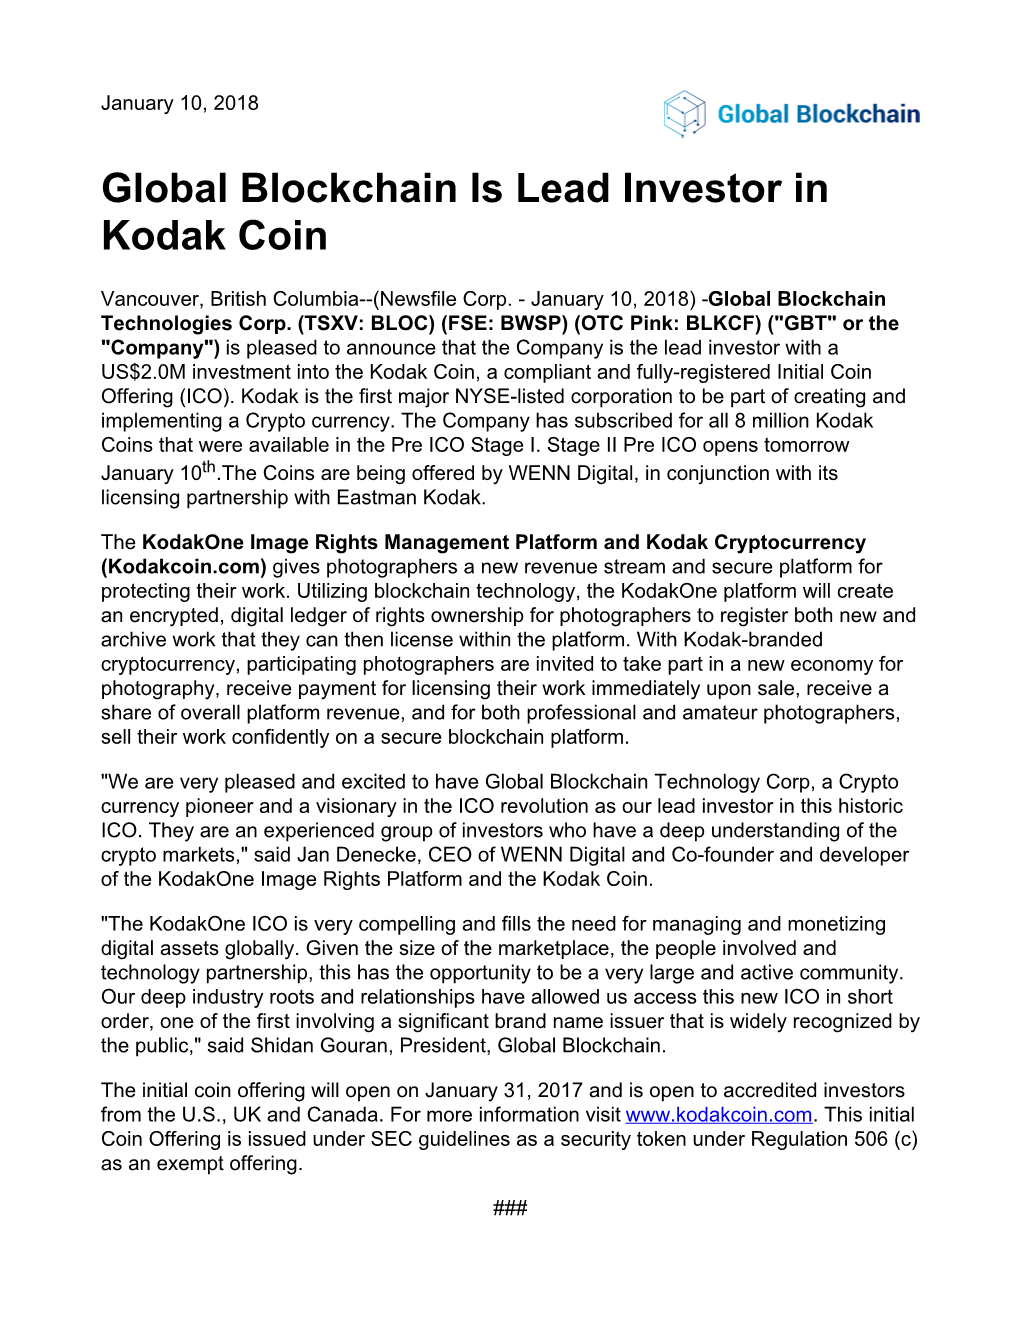 Global Blockchain Is Lead Investor in Kodak Coin